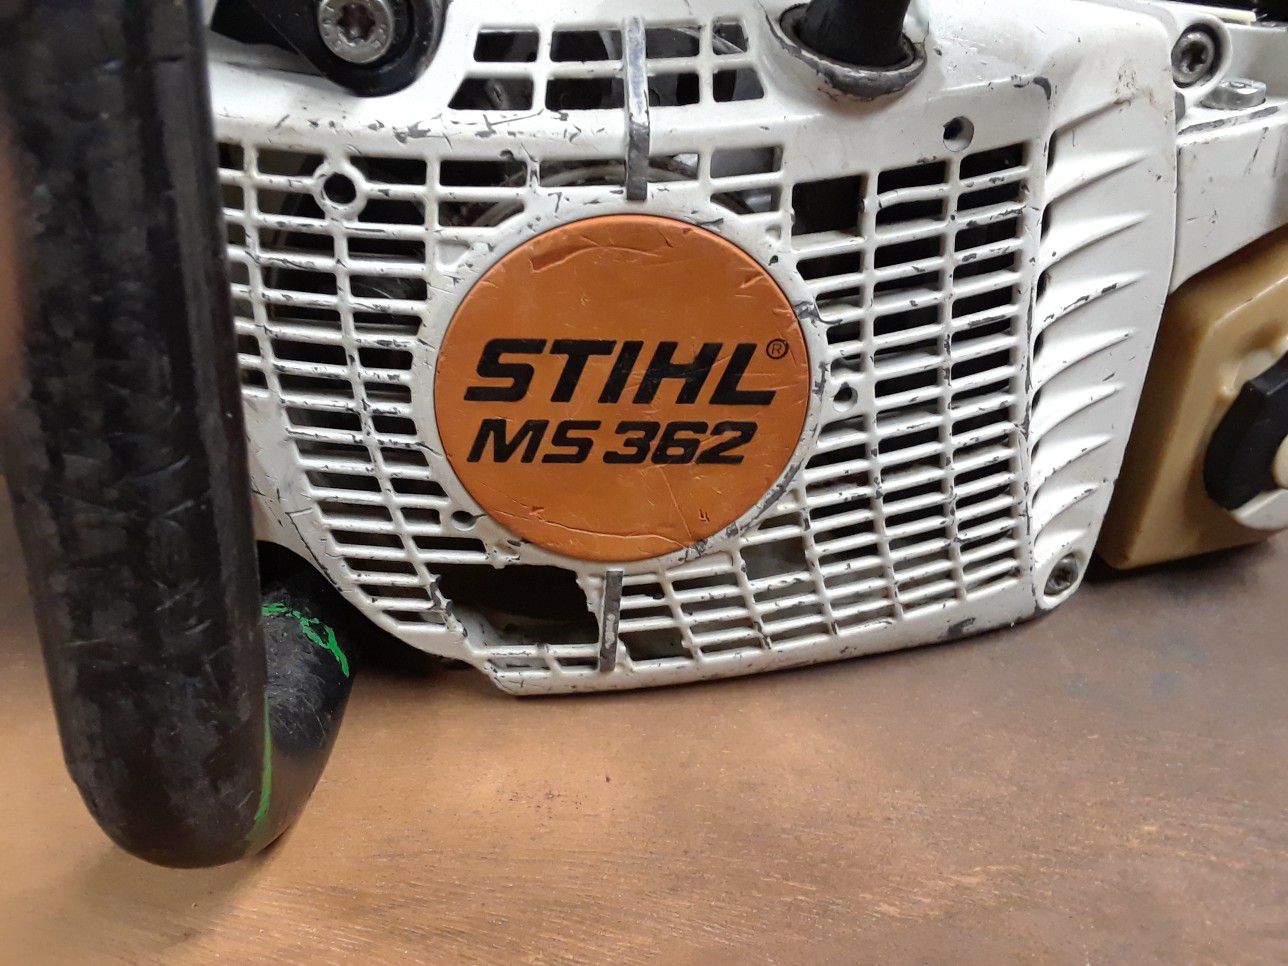 Stihl br.362 saw ($800.00) new..